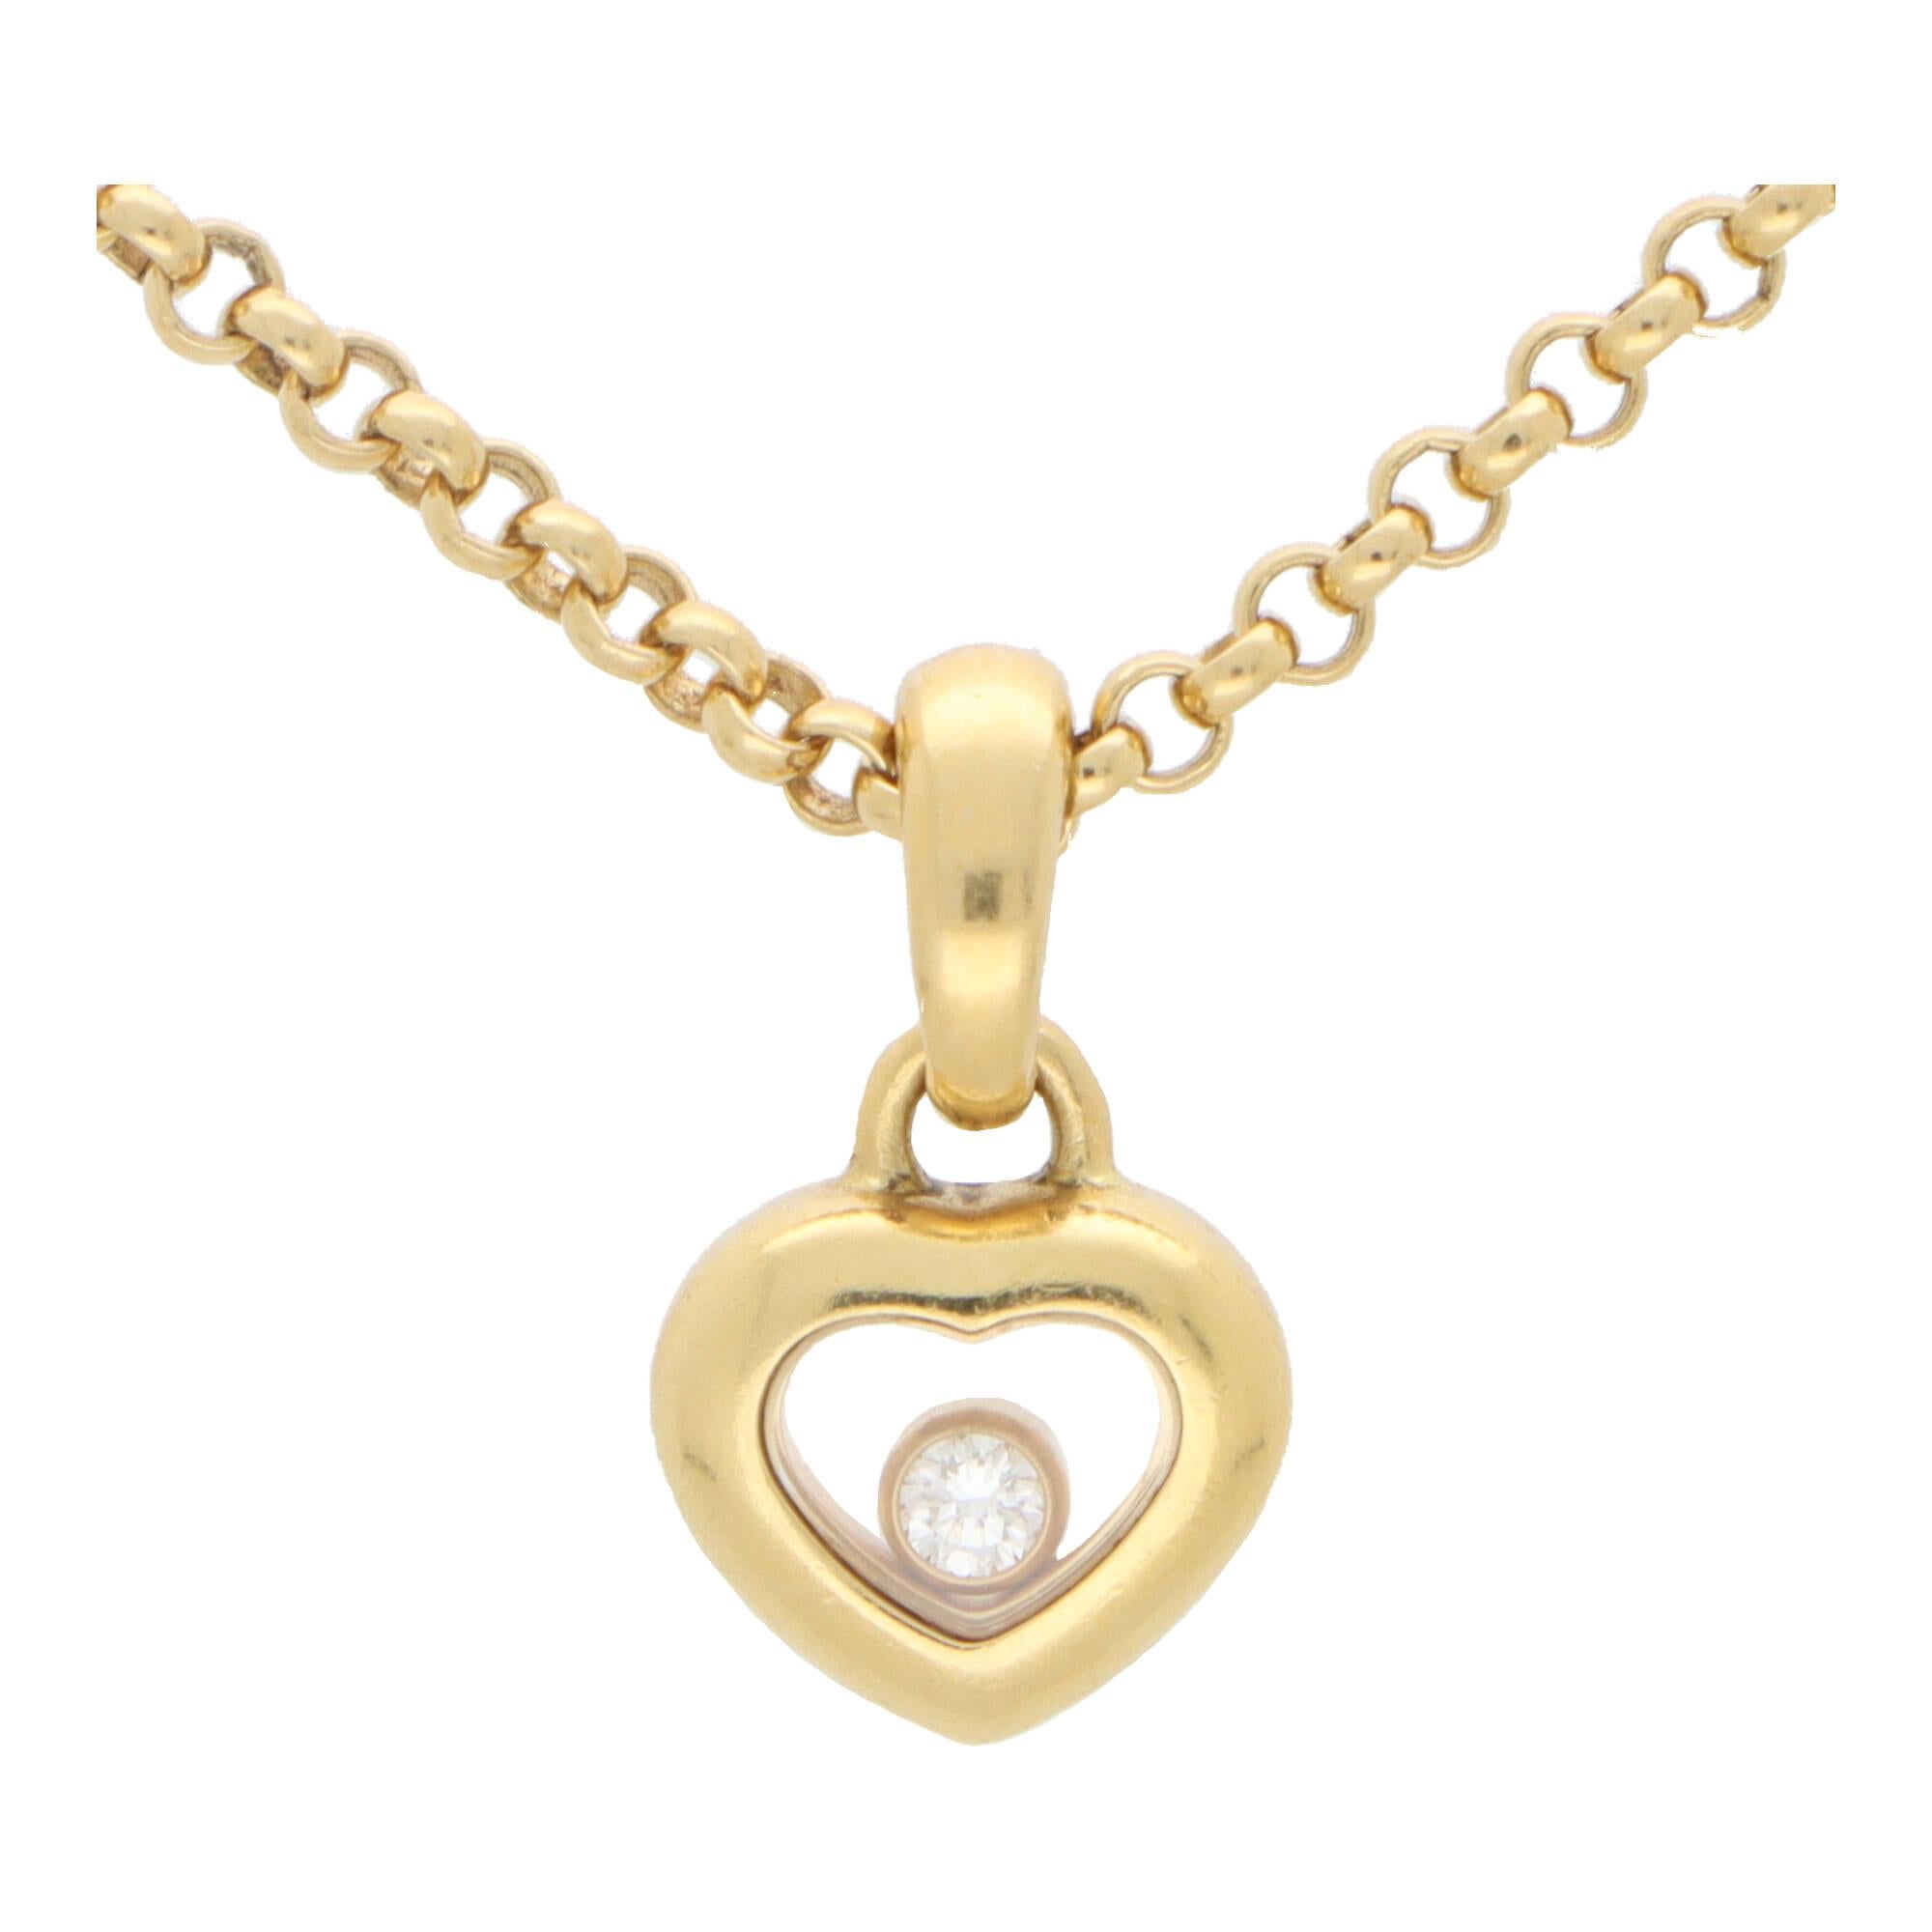 chopard heart necklace